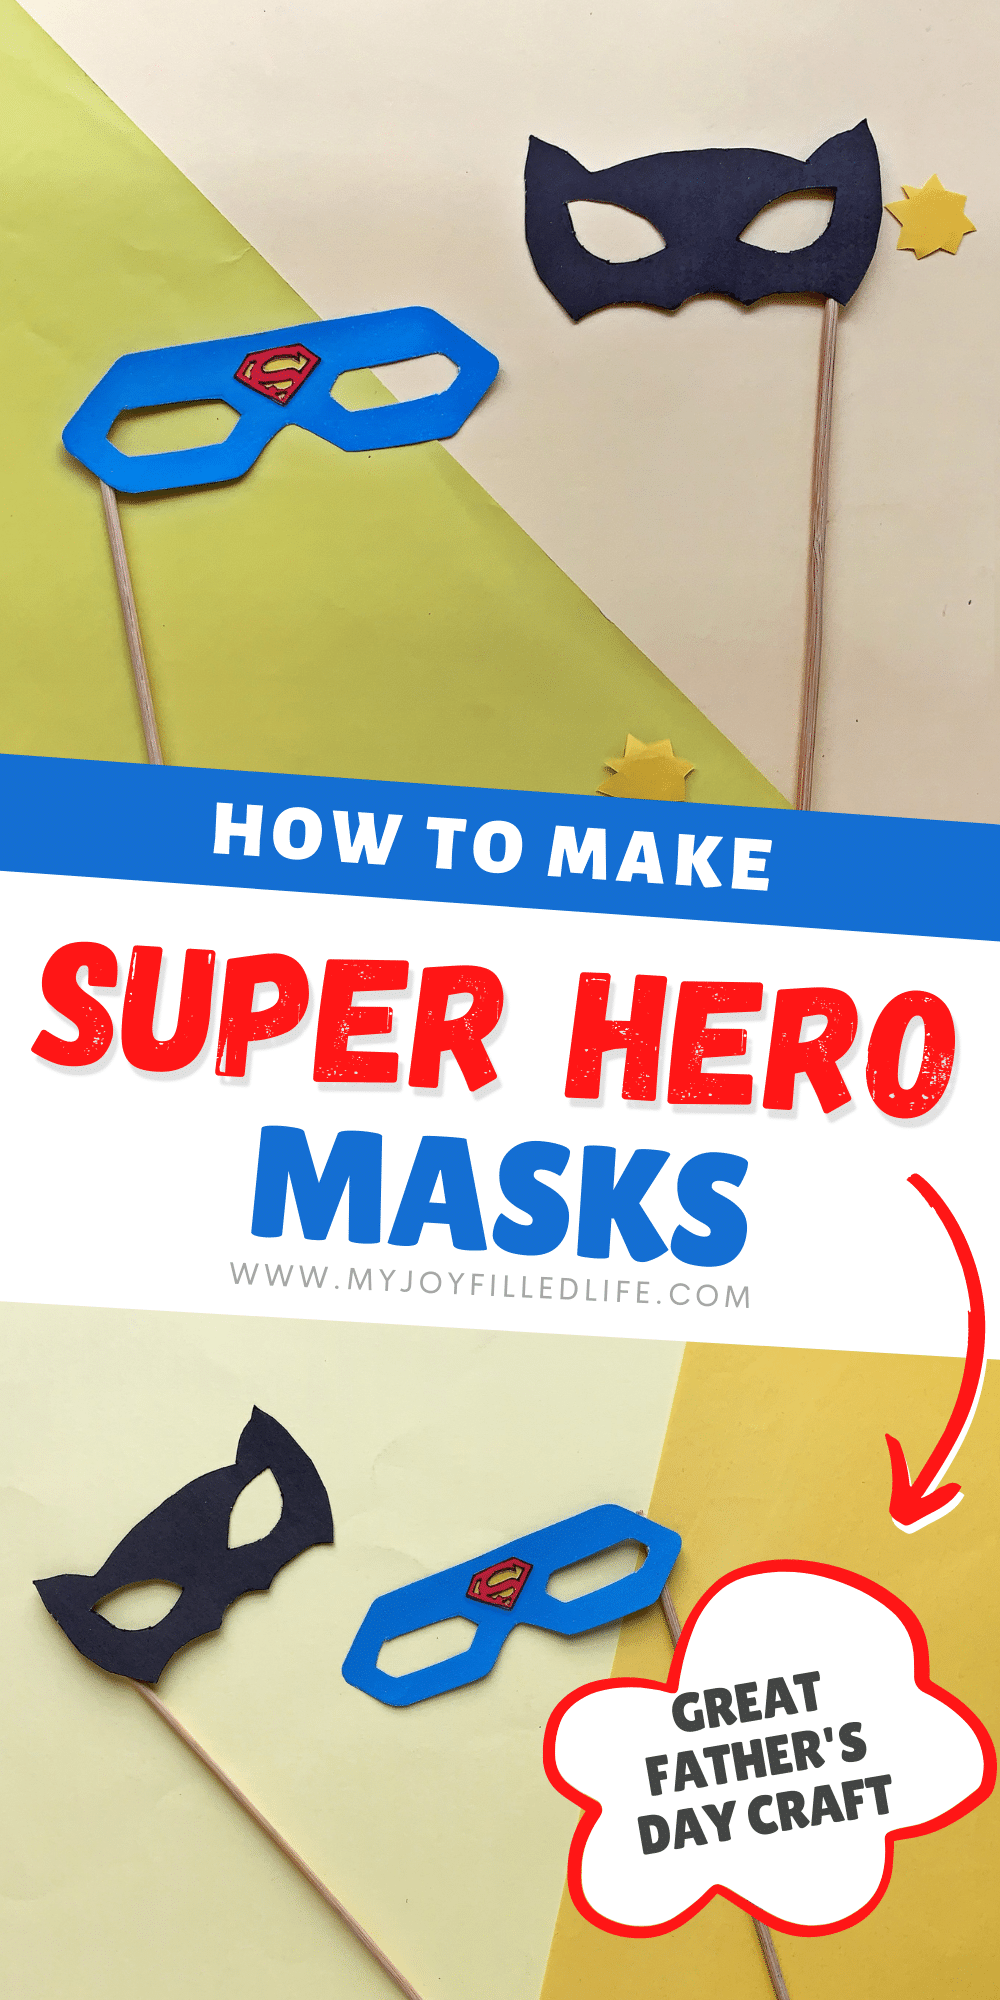 Superhero Masks with Template